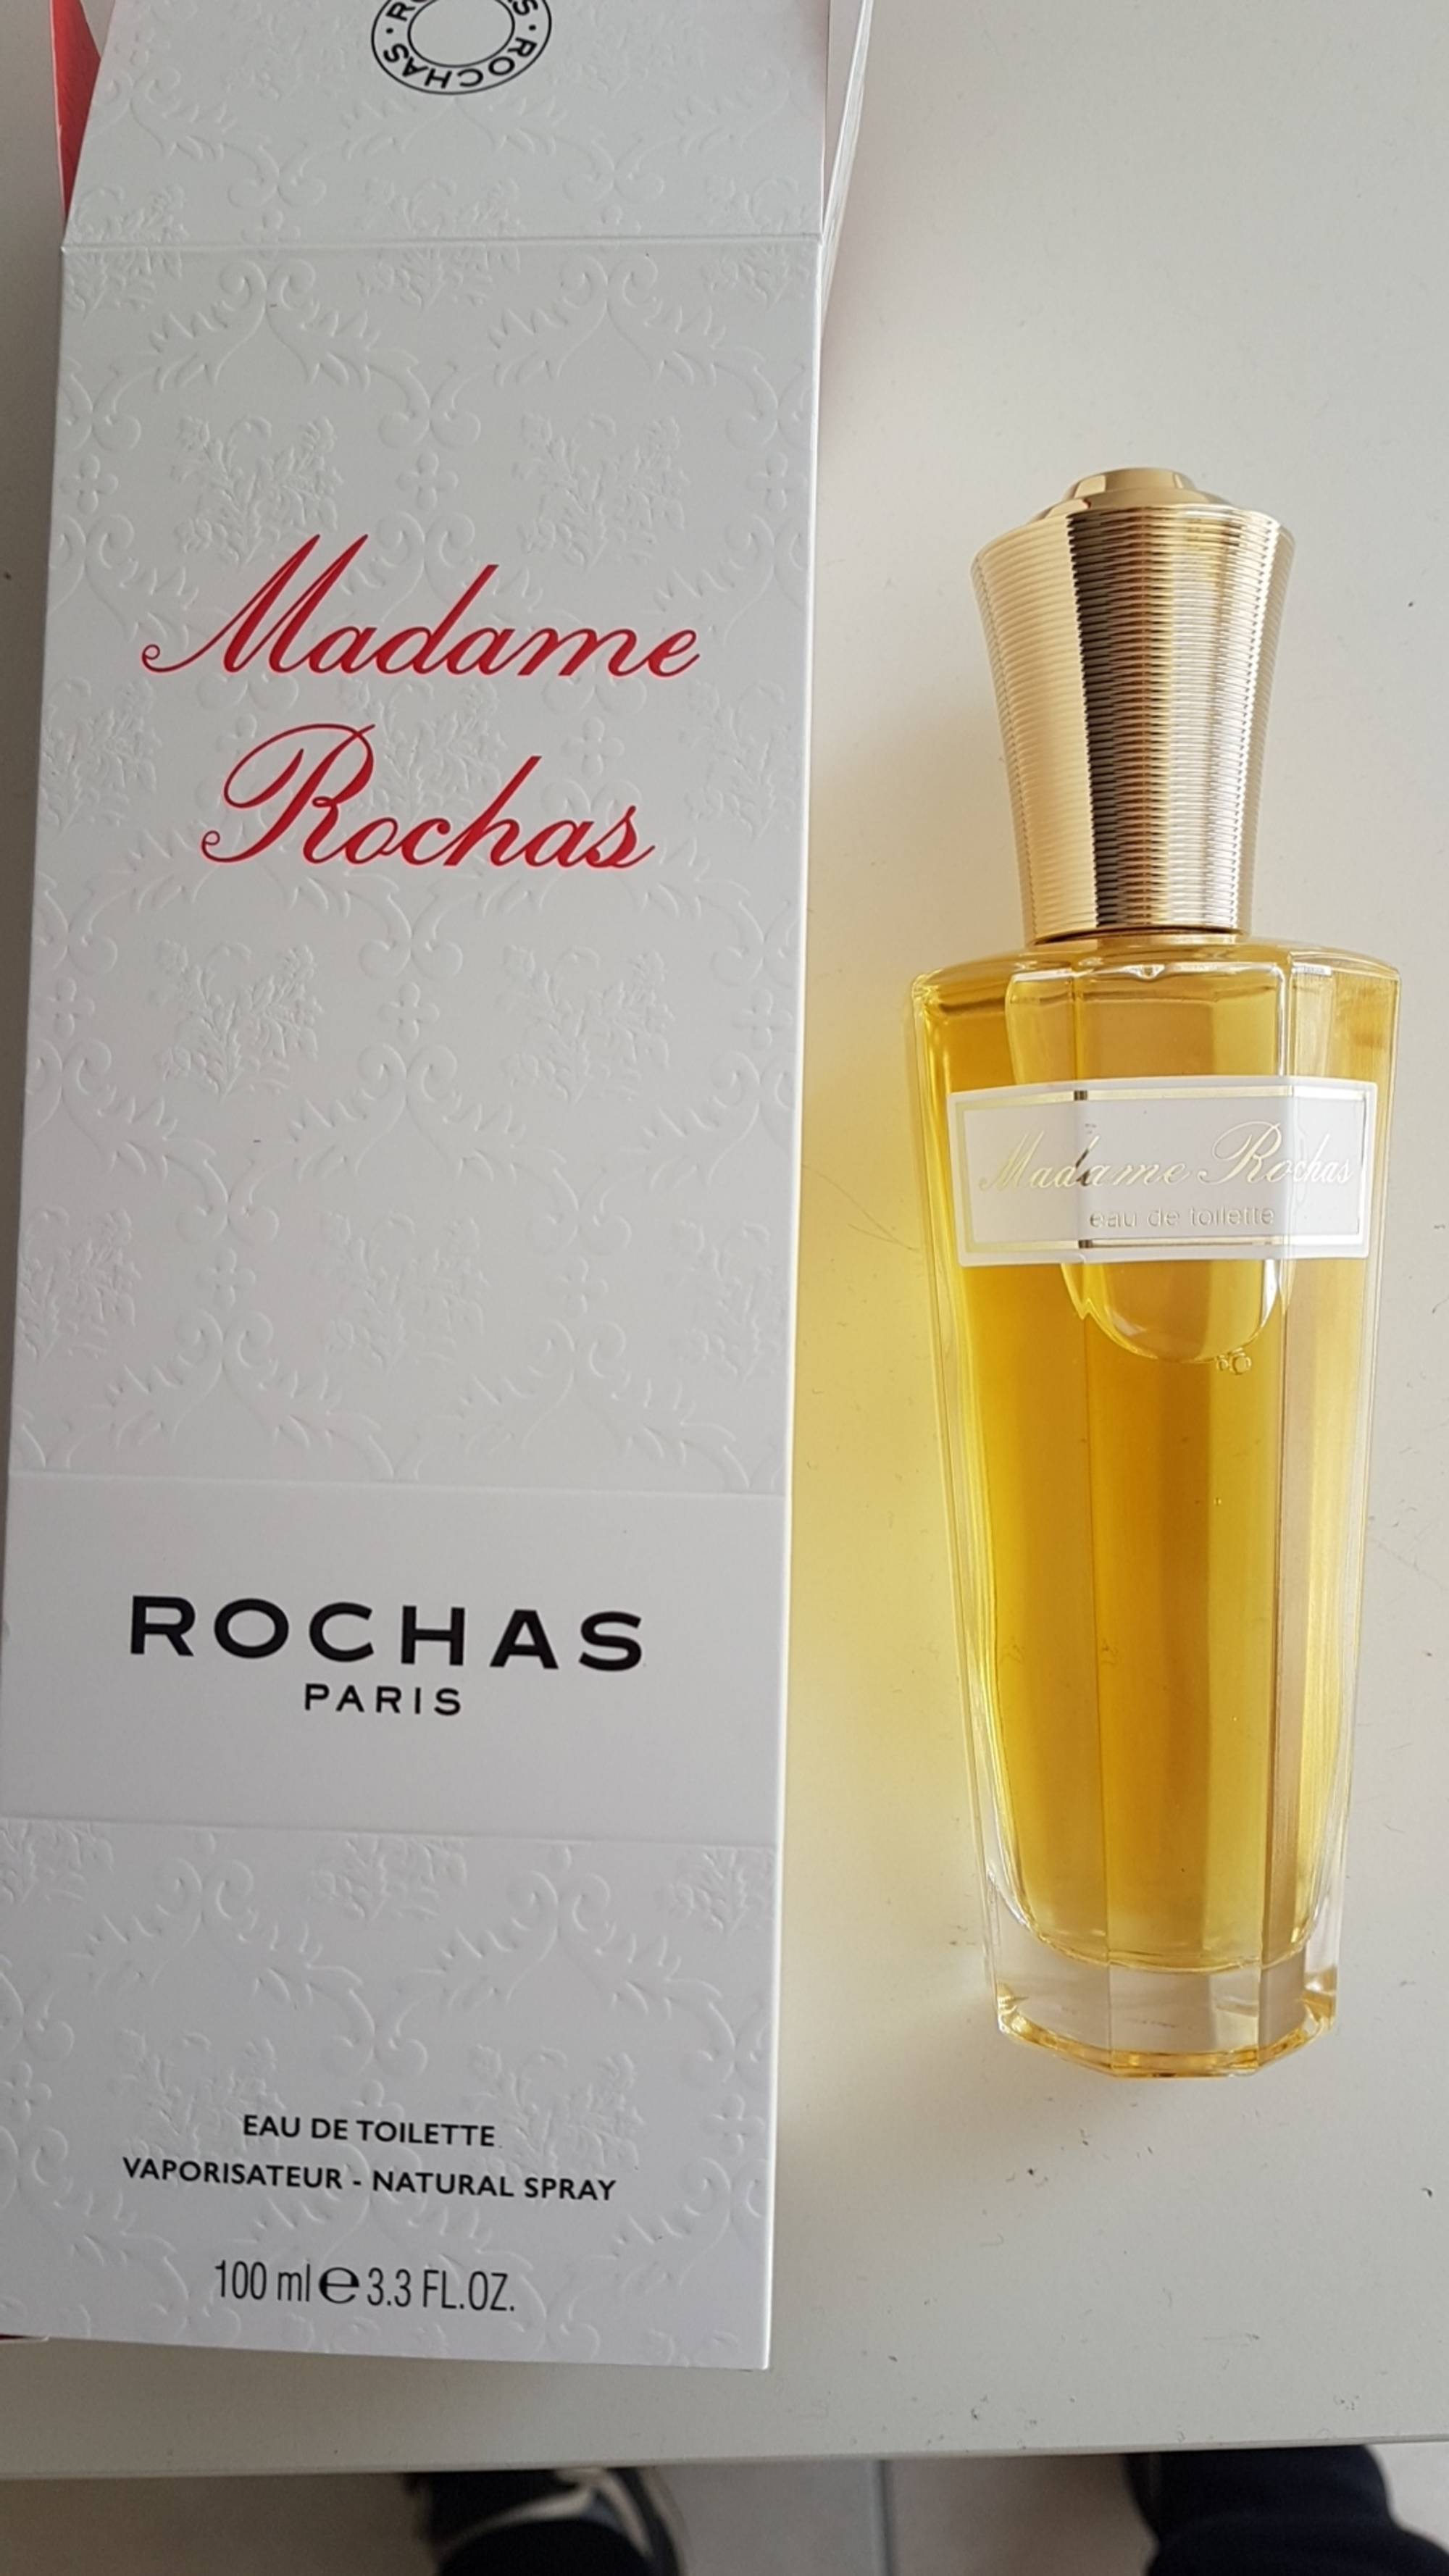 ROCHAS - Madame Rochas - Eau de toilette